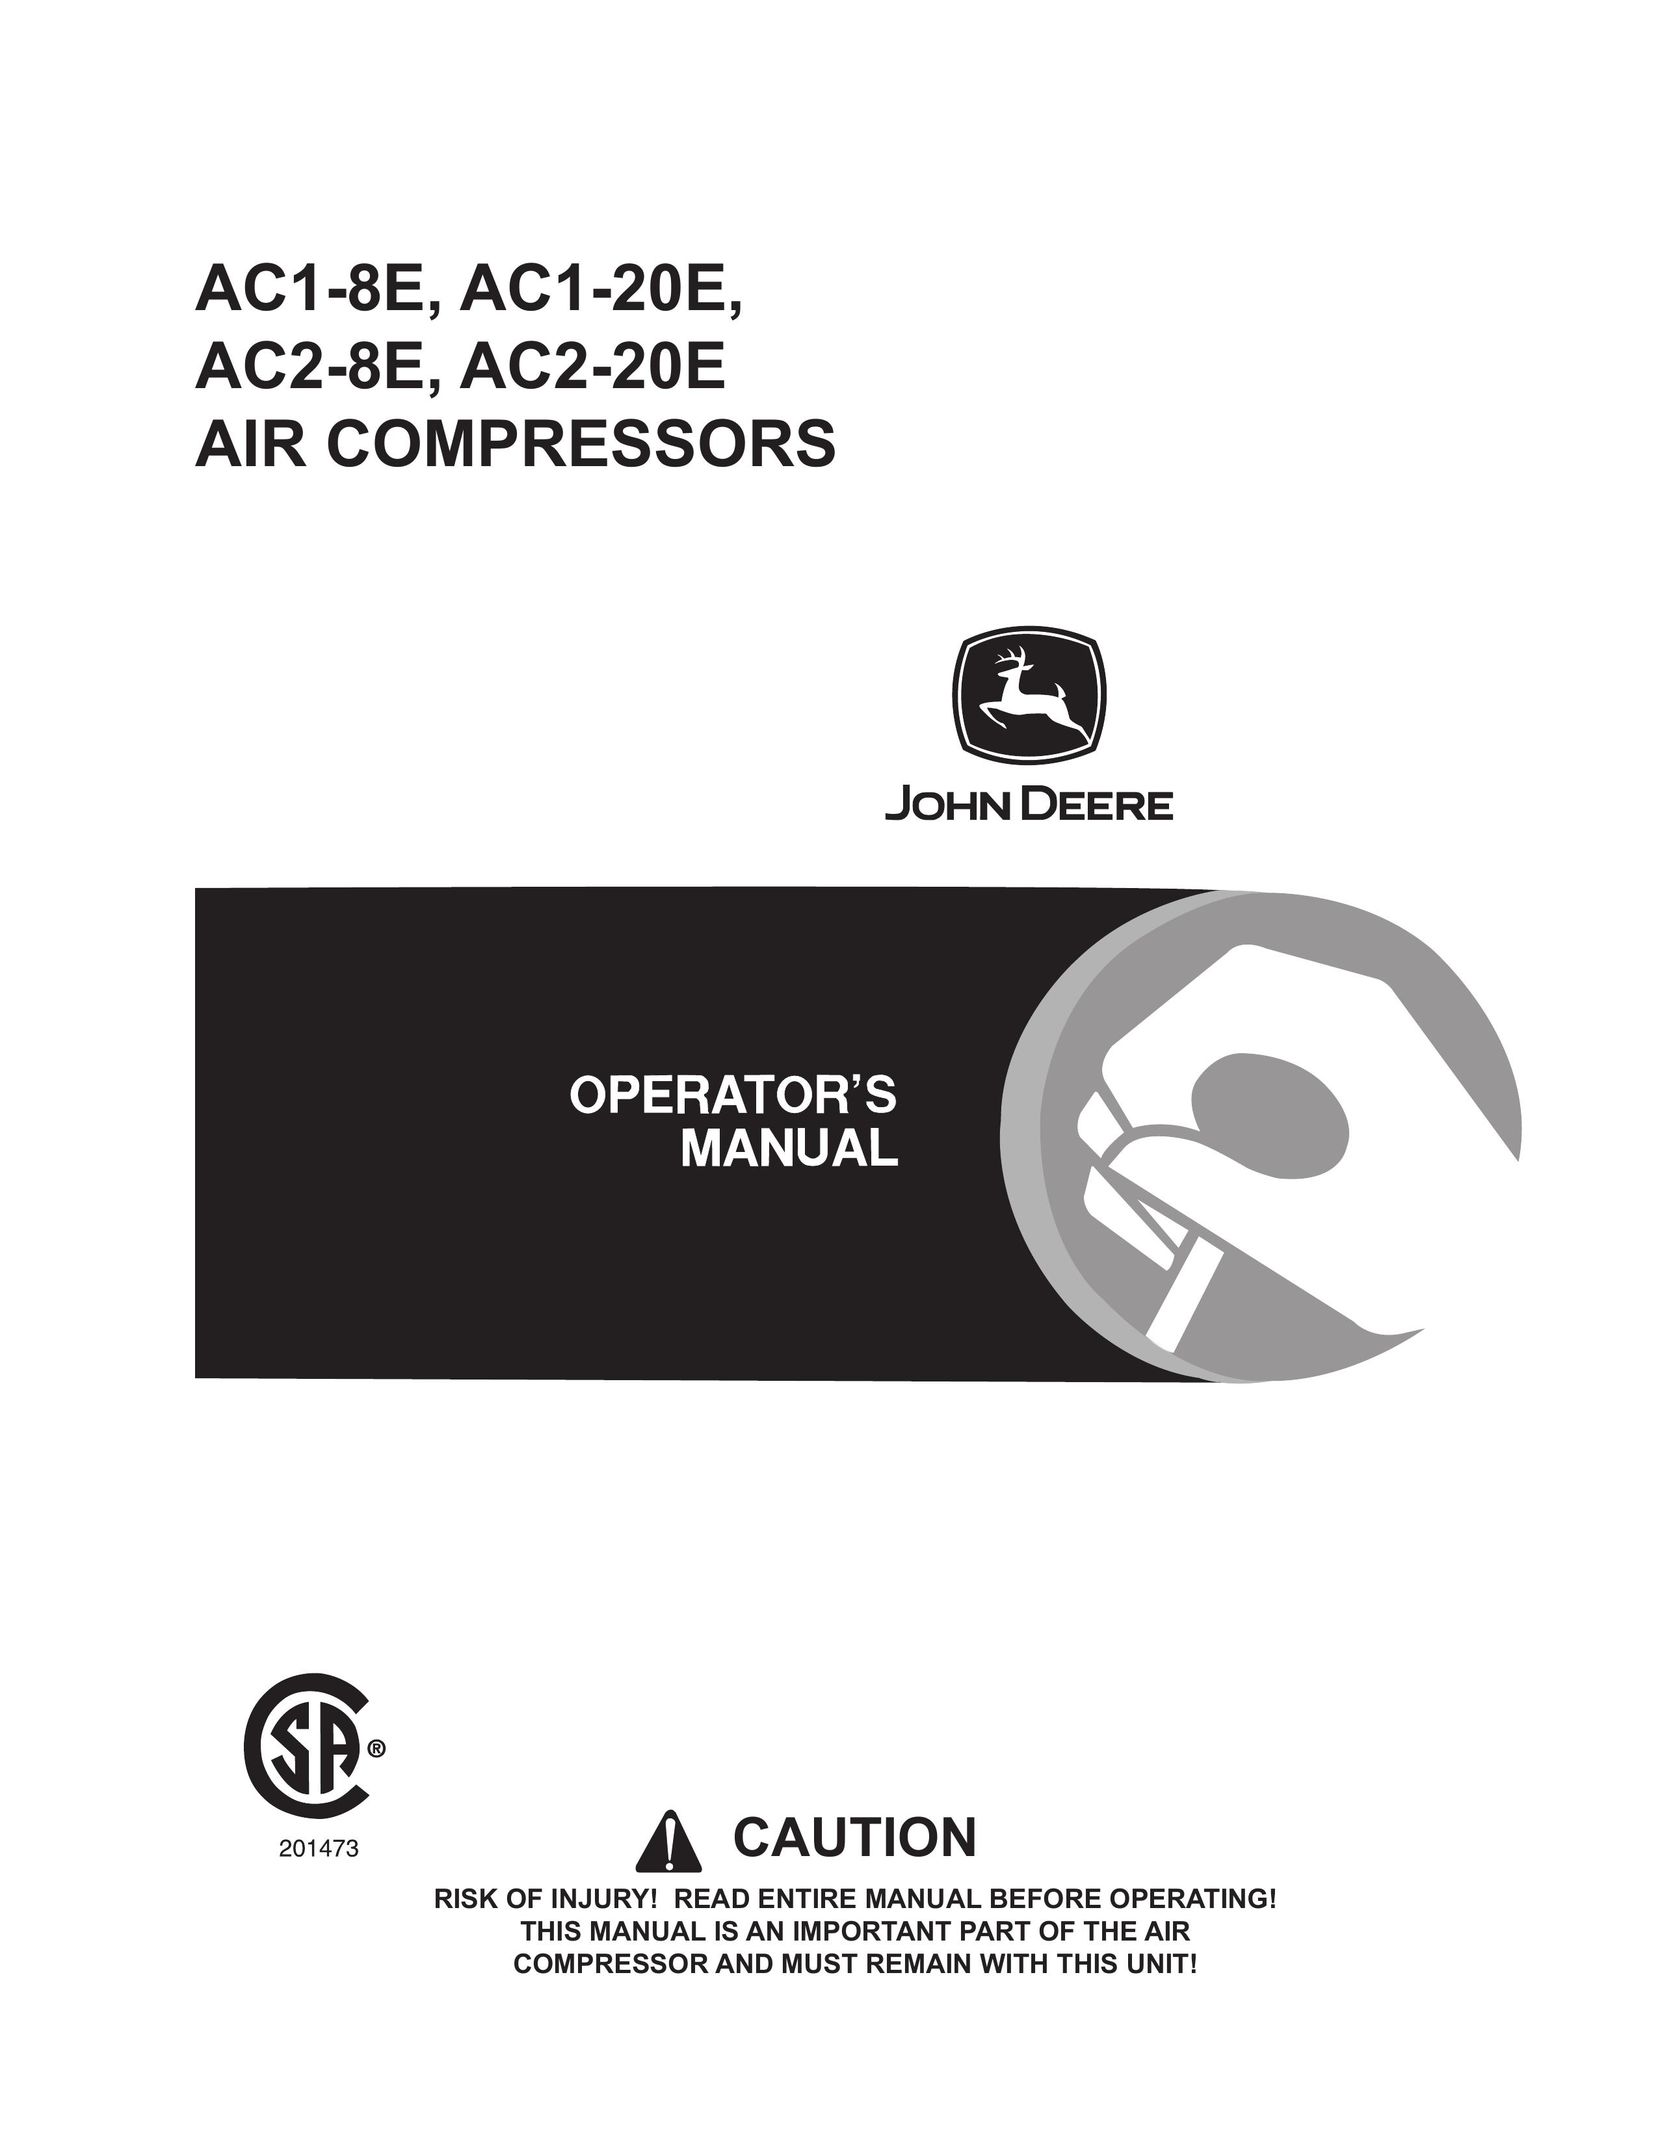 John Deere AC2-20E Air Compressor User Manual